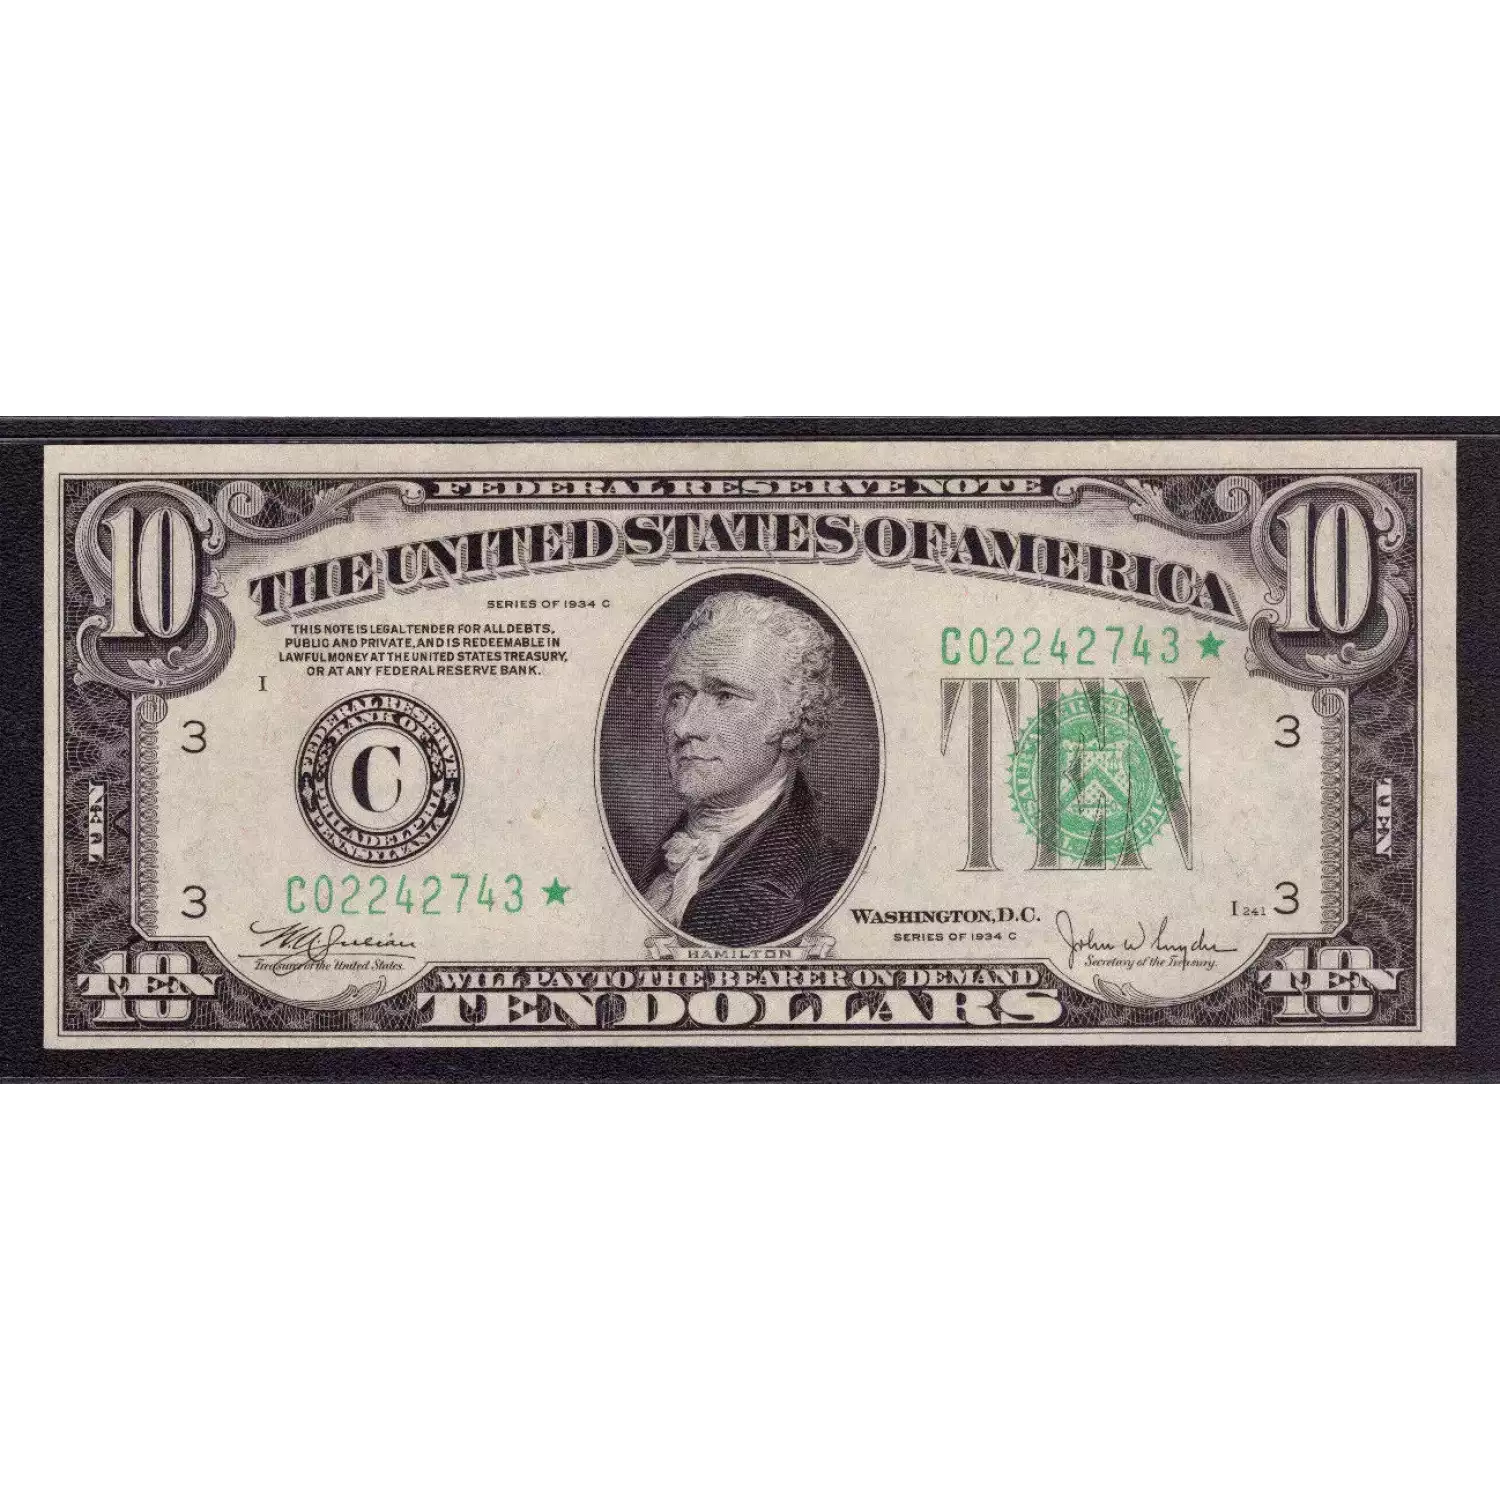 Federal Reserve Note Philadelphia